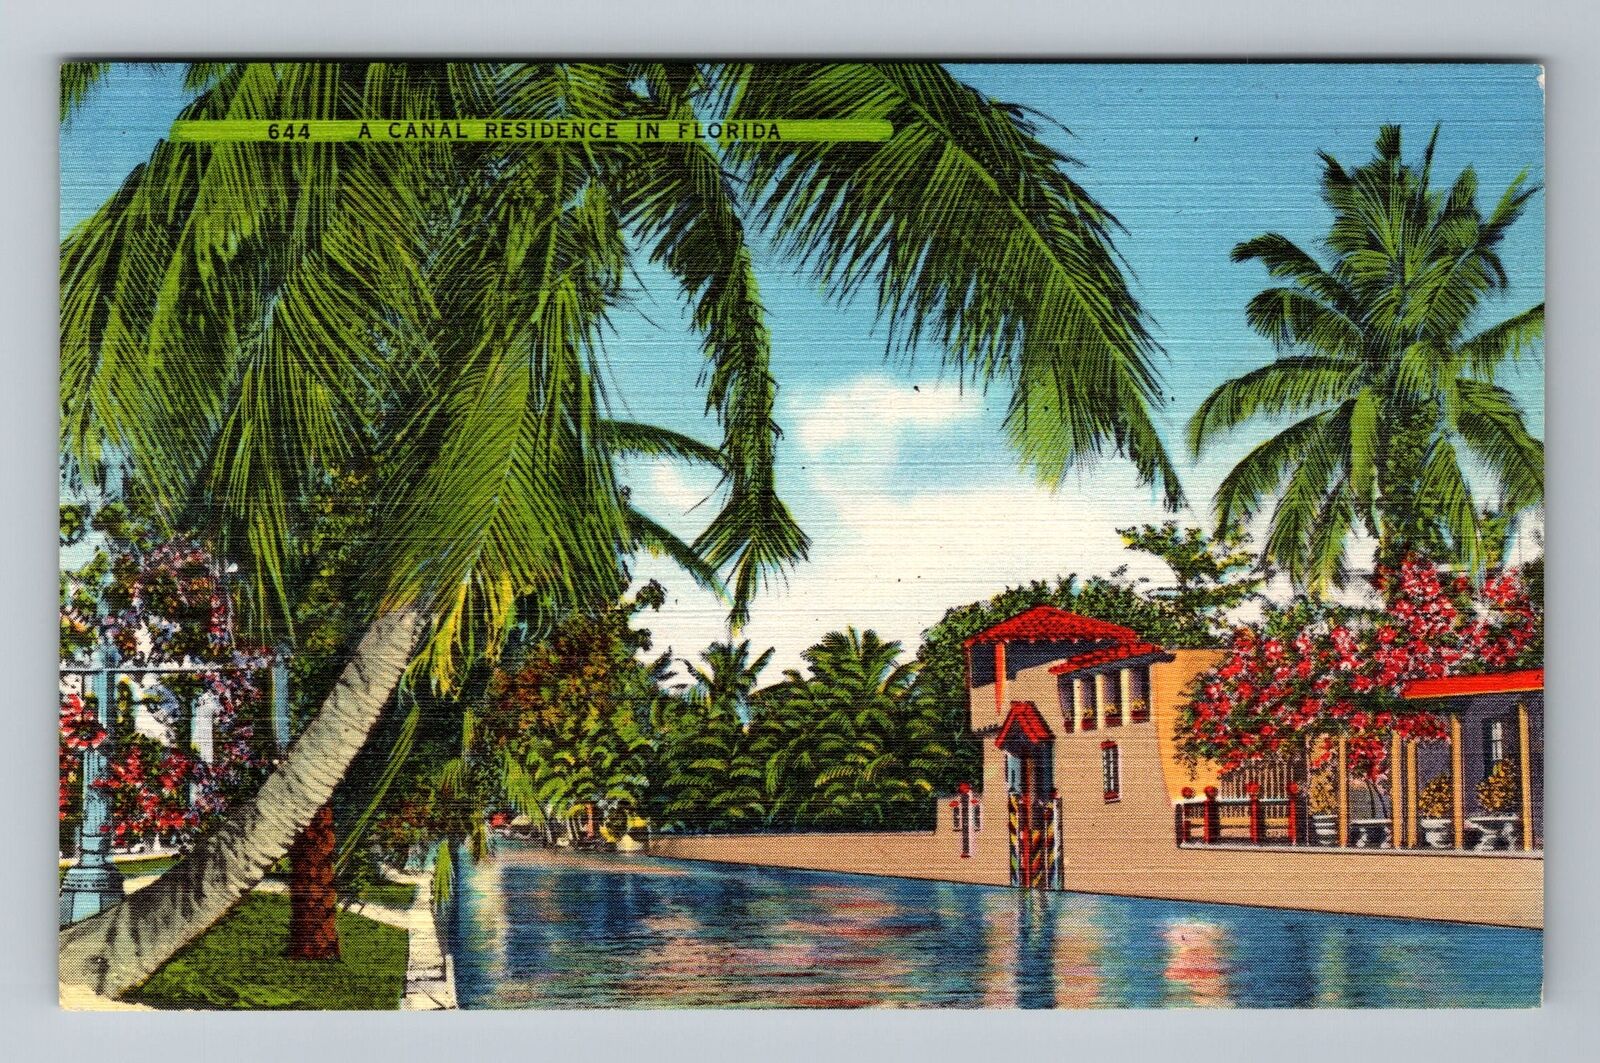 FL-Florida A Tropical Canal Residence Trees & Plants Vintage Souvenir Postcard